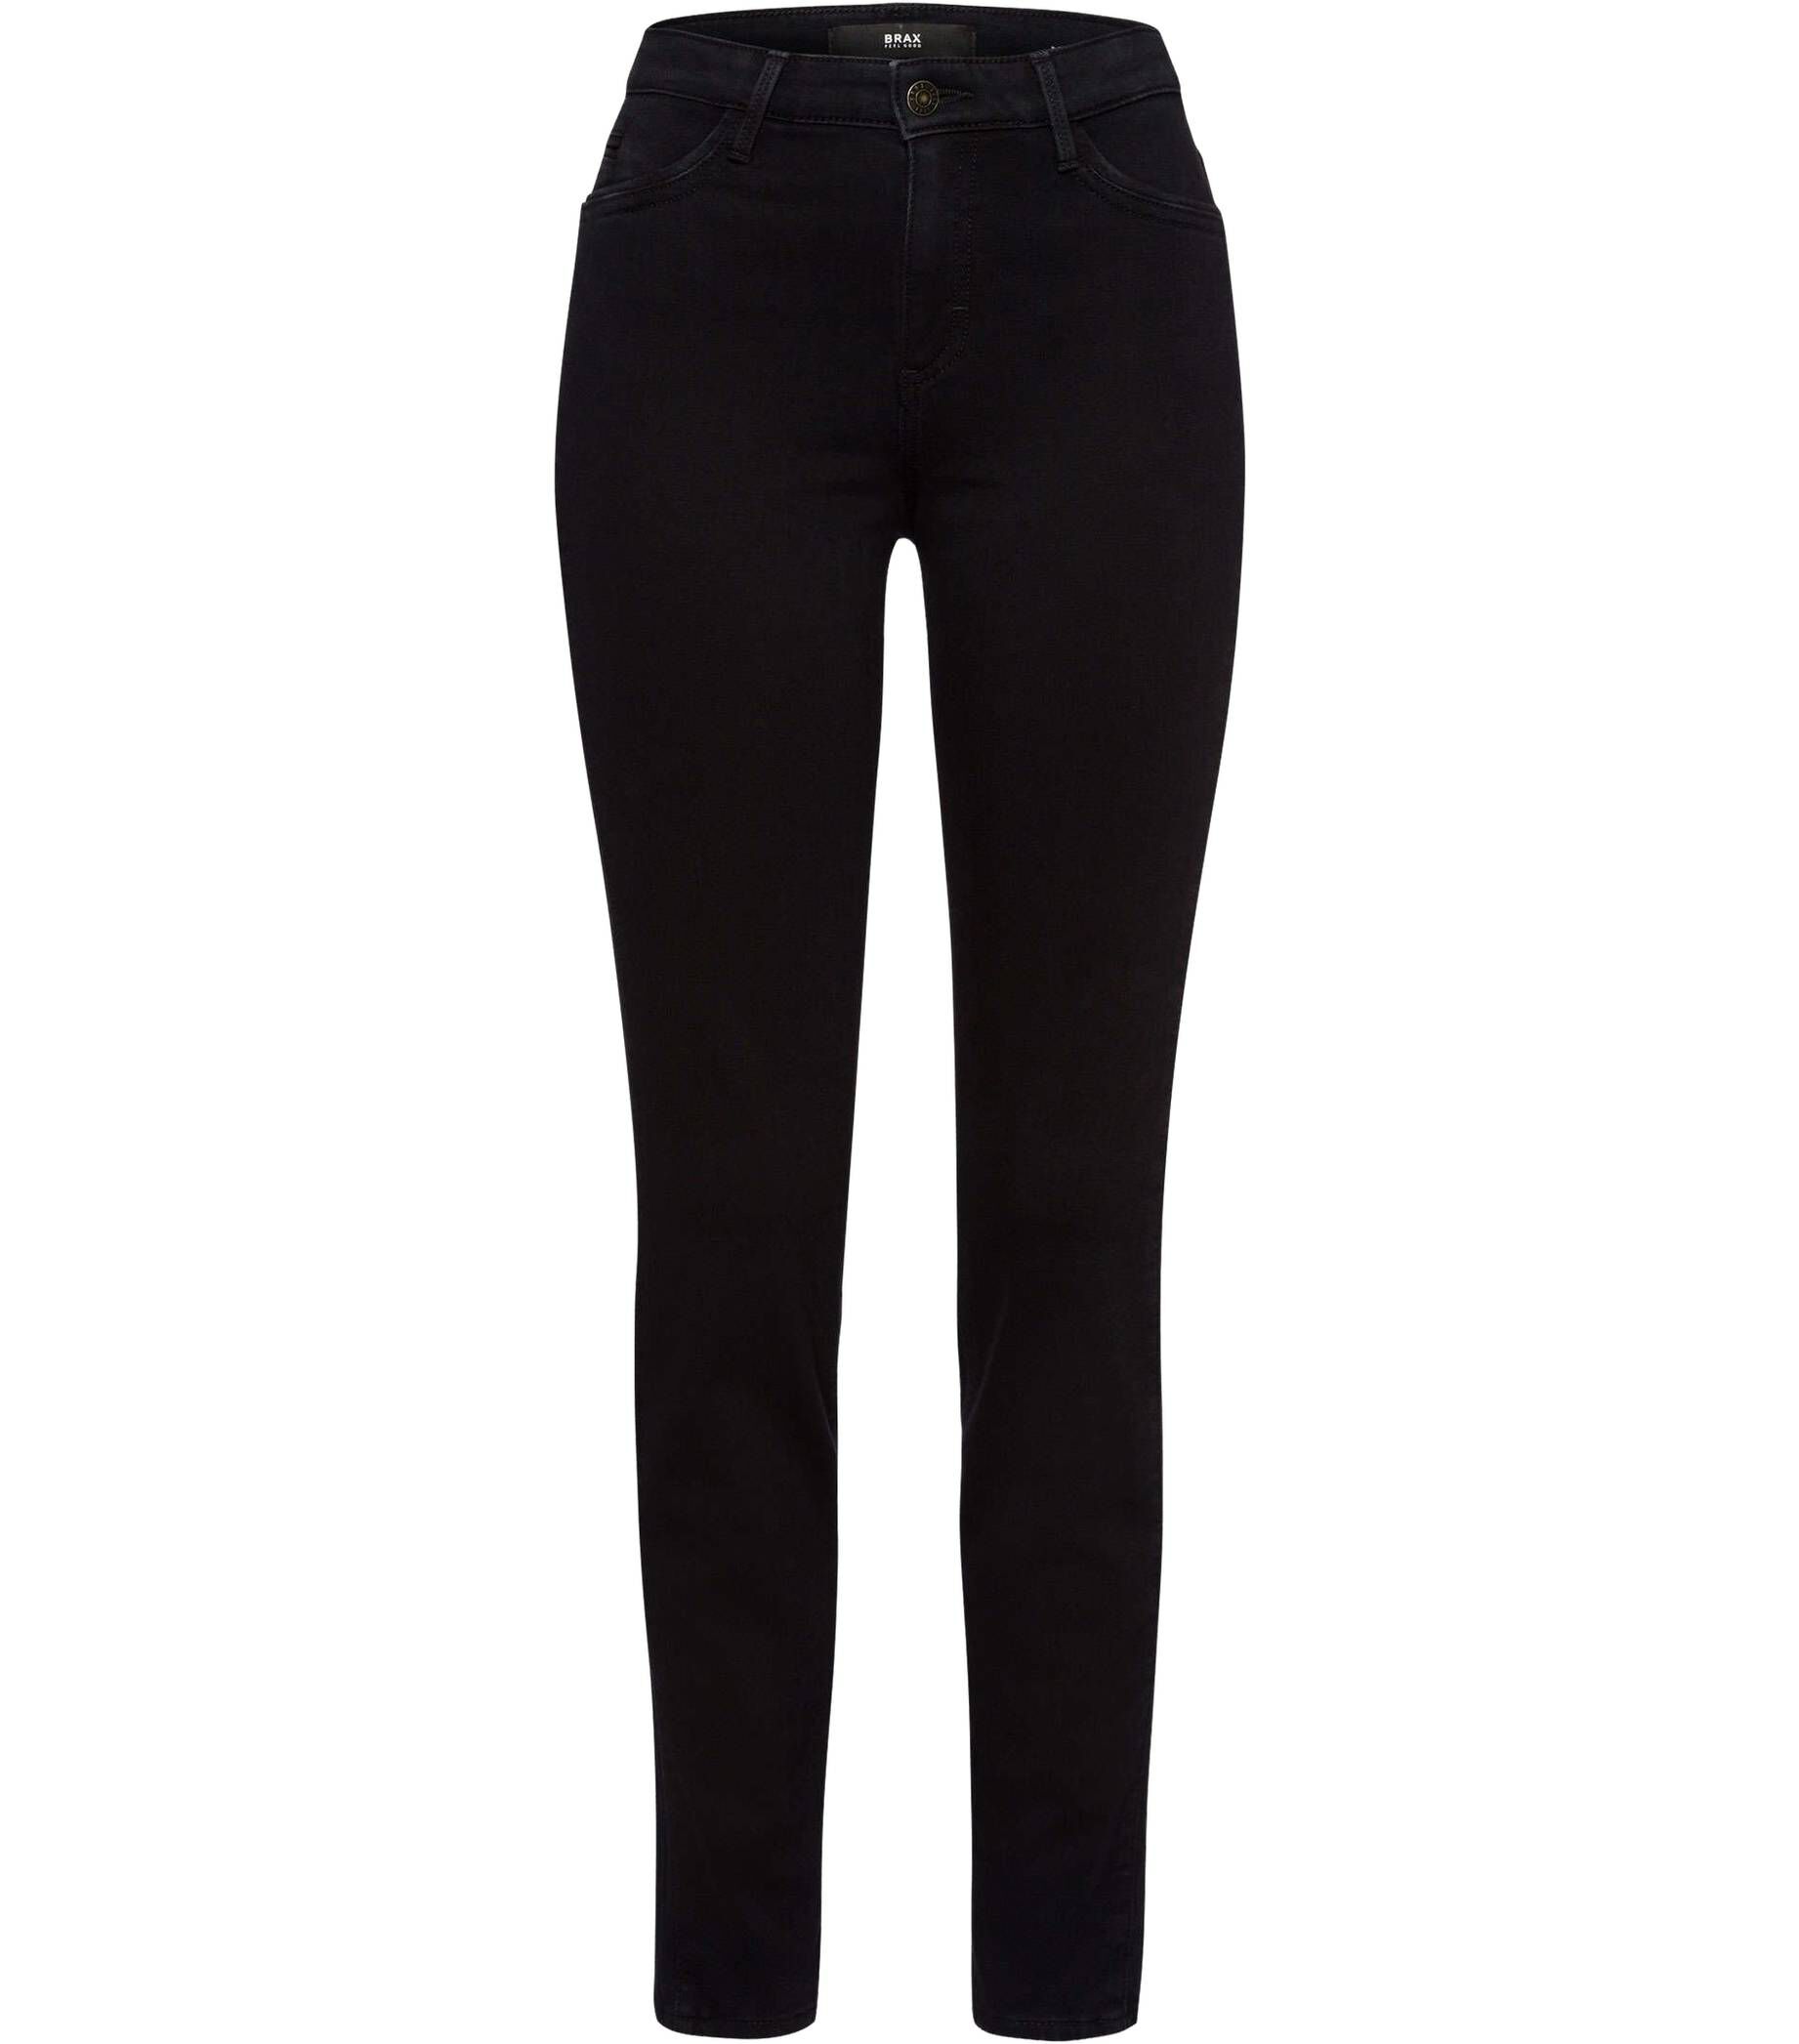 BRAX Damen Jeans STYLE SHAKIRA Thermo Slim Fit kaufen | engelhorn